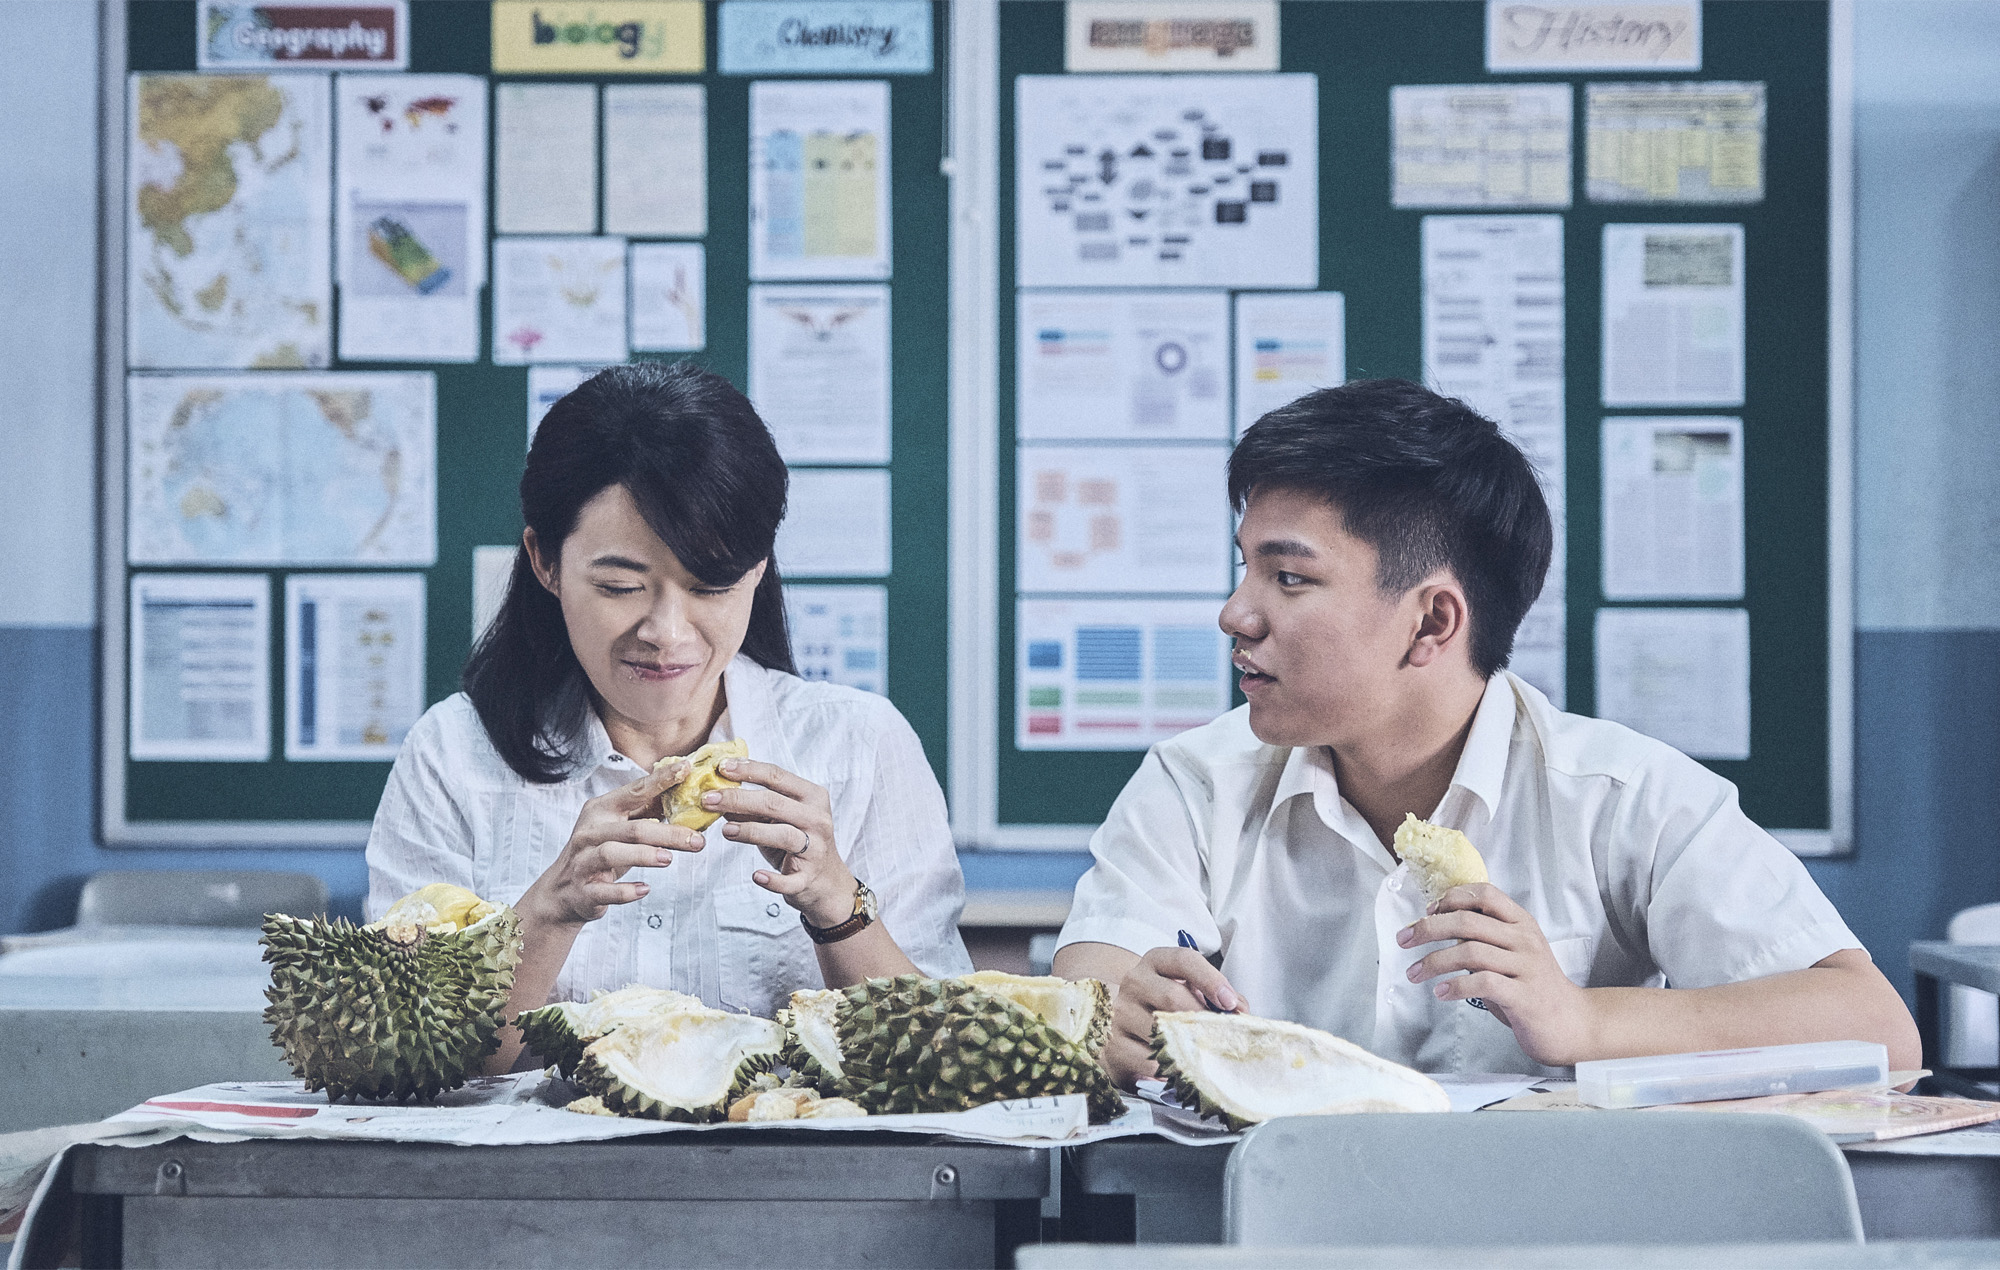 Yeo Yann Yann and Koh Jia Ler in Singaporean drama film Wet Season (2019).